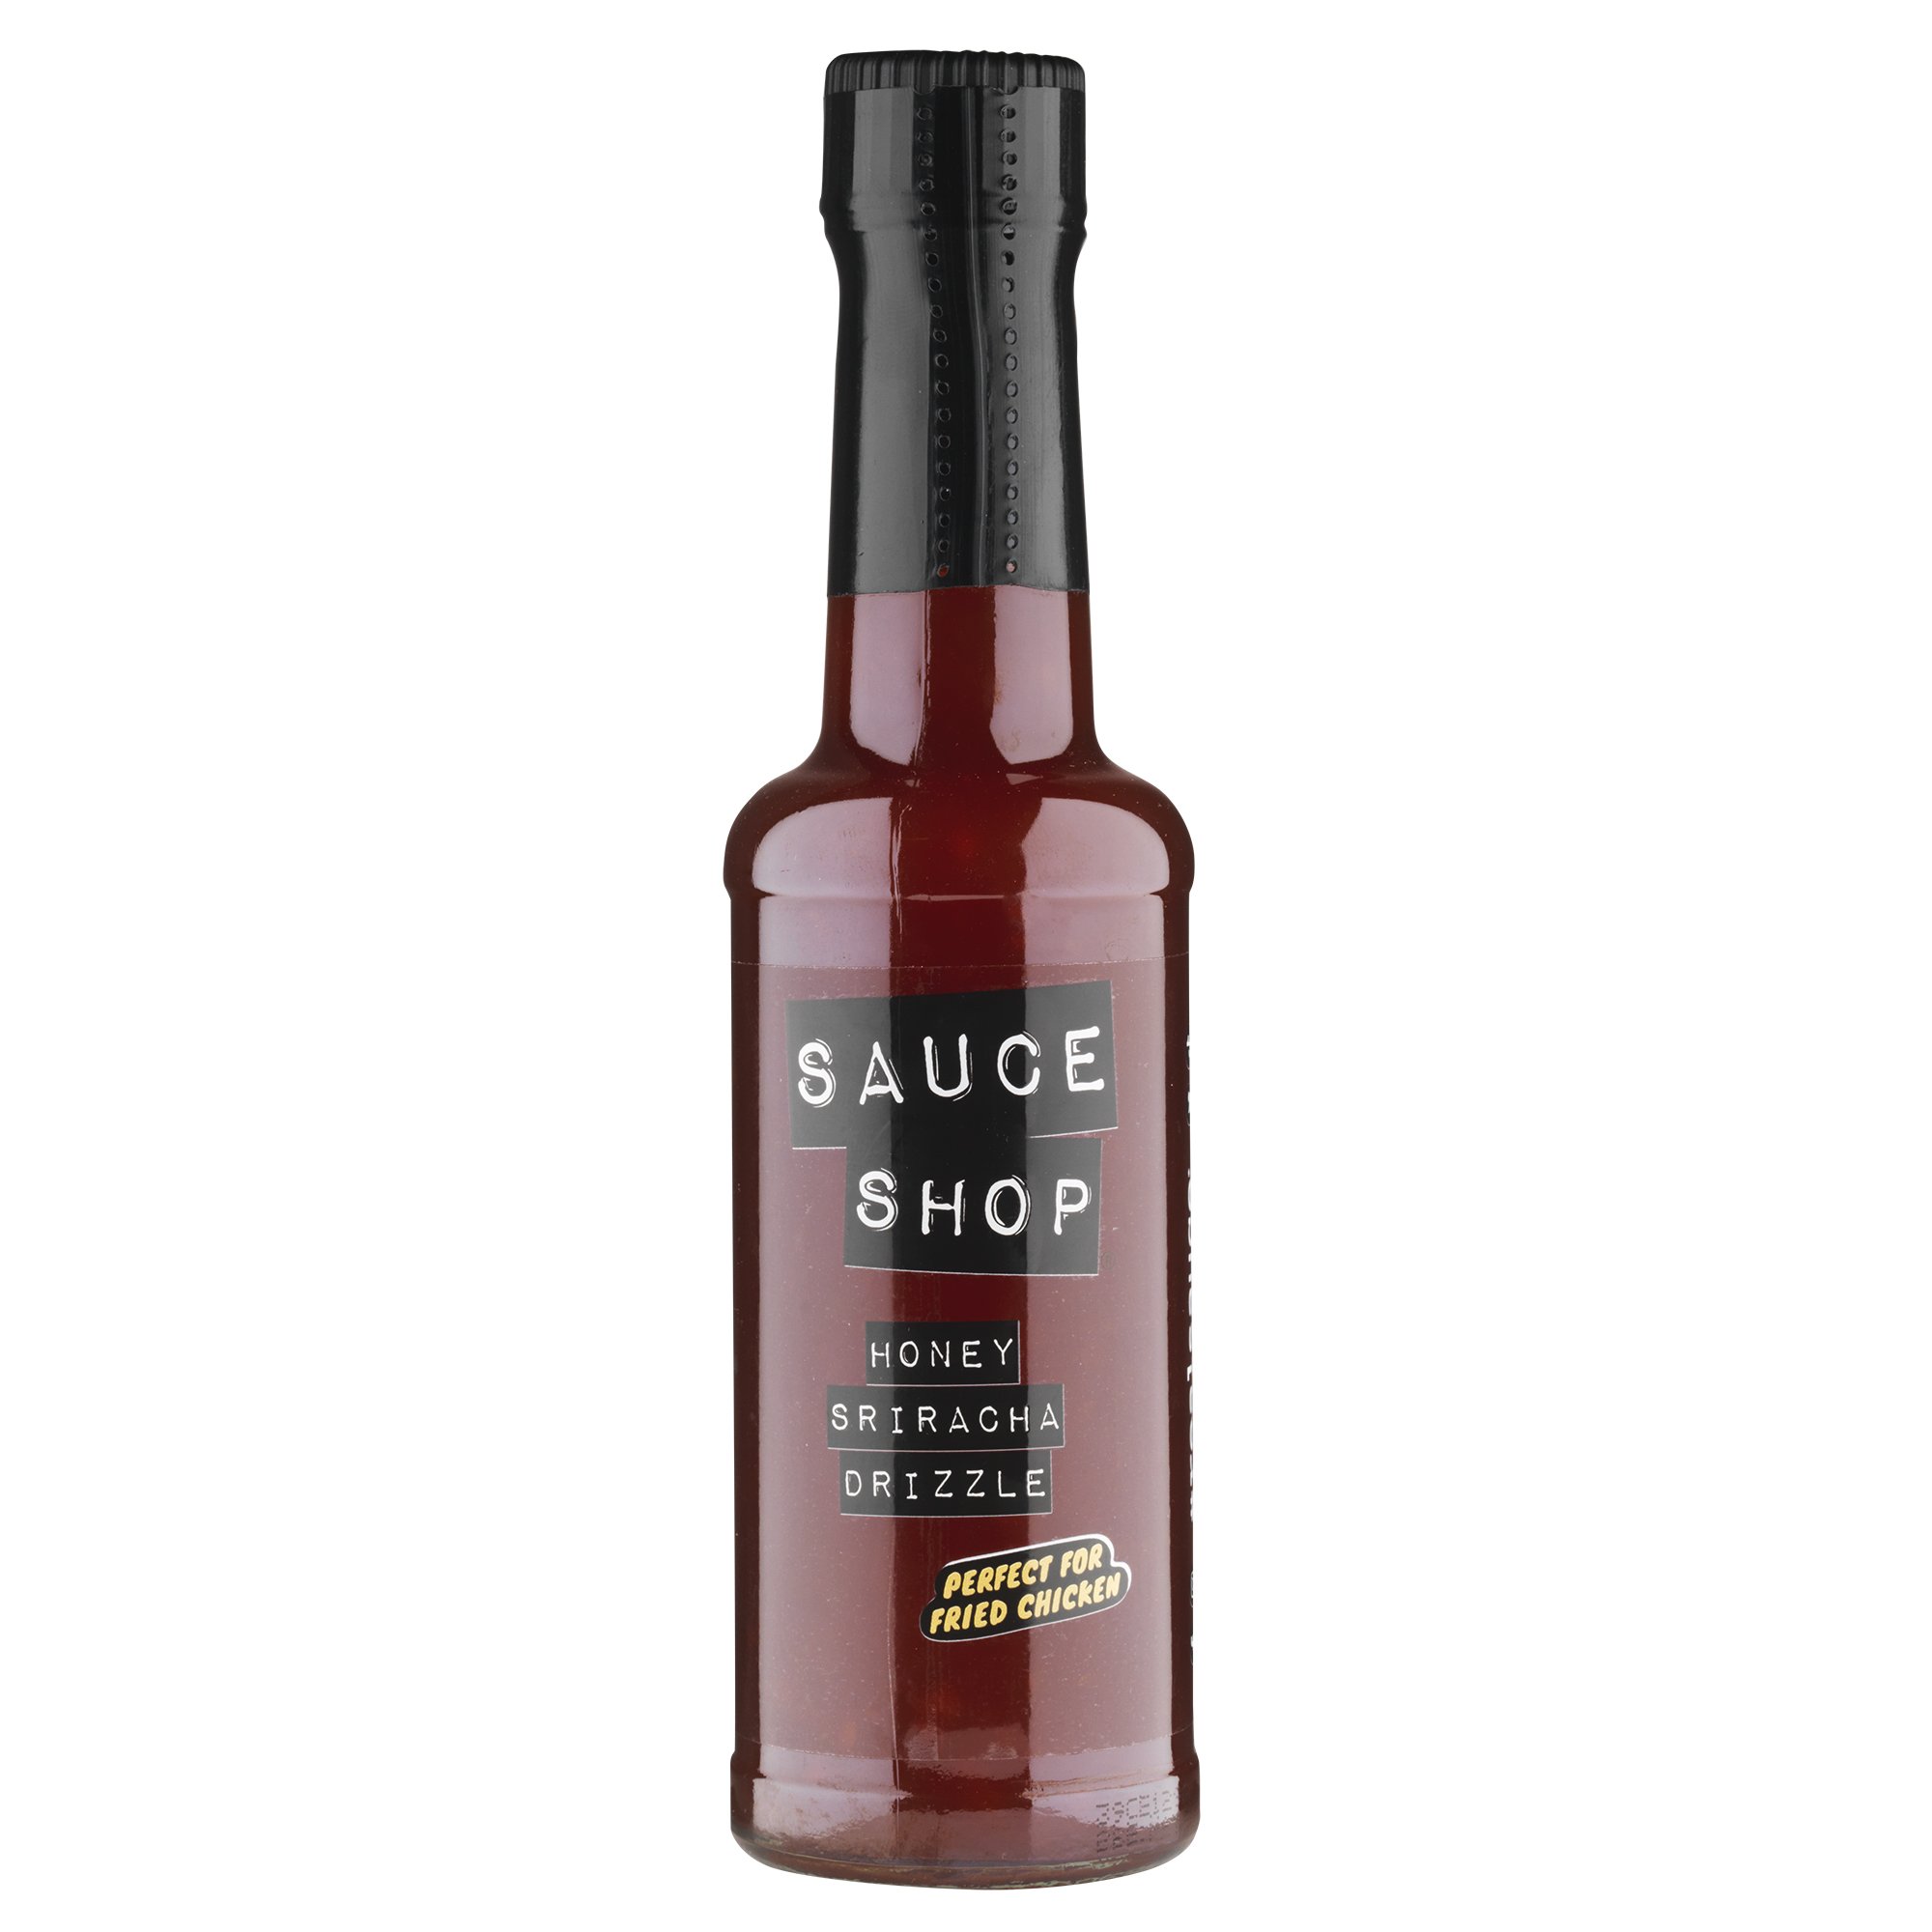 Sauce Shop Honey Sriracha Drizzle dipsauce 190 g